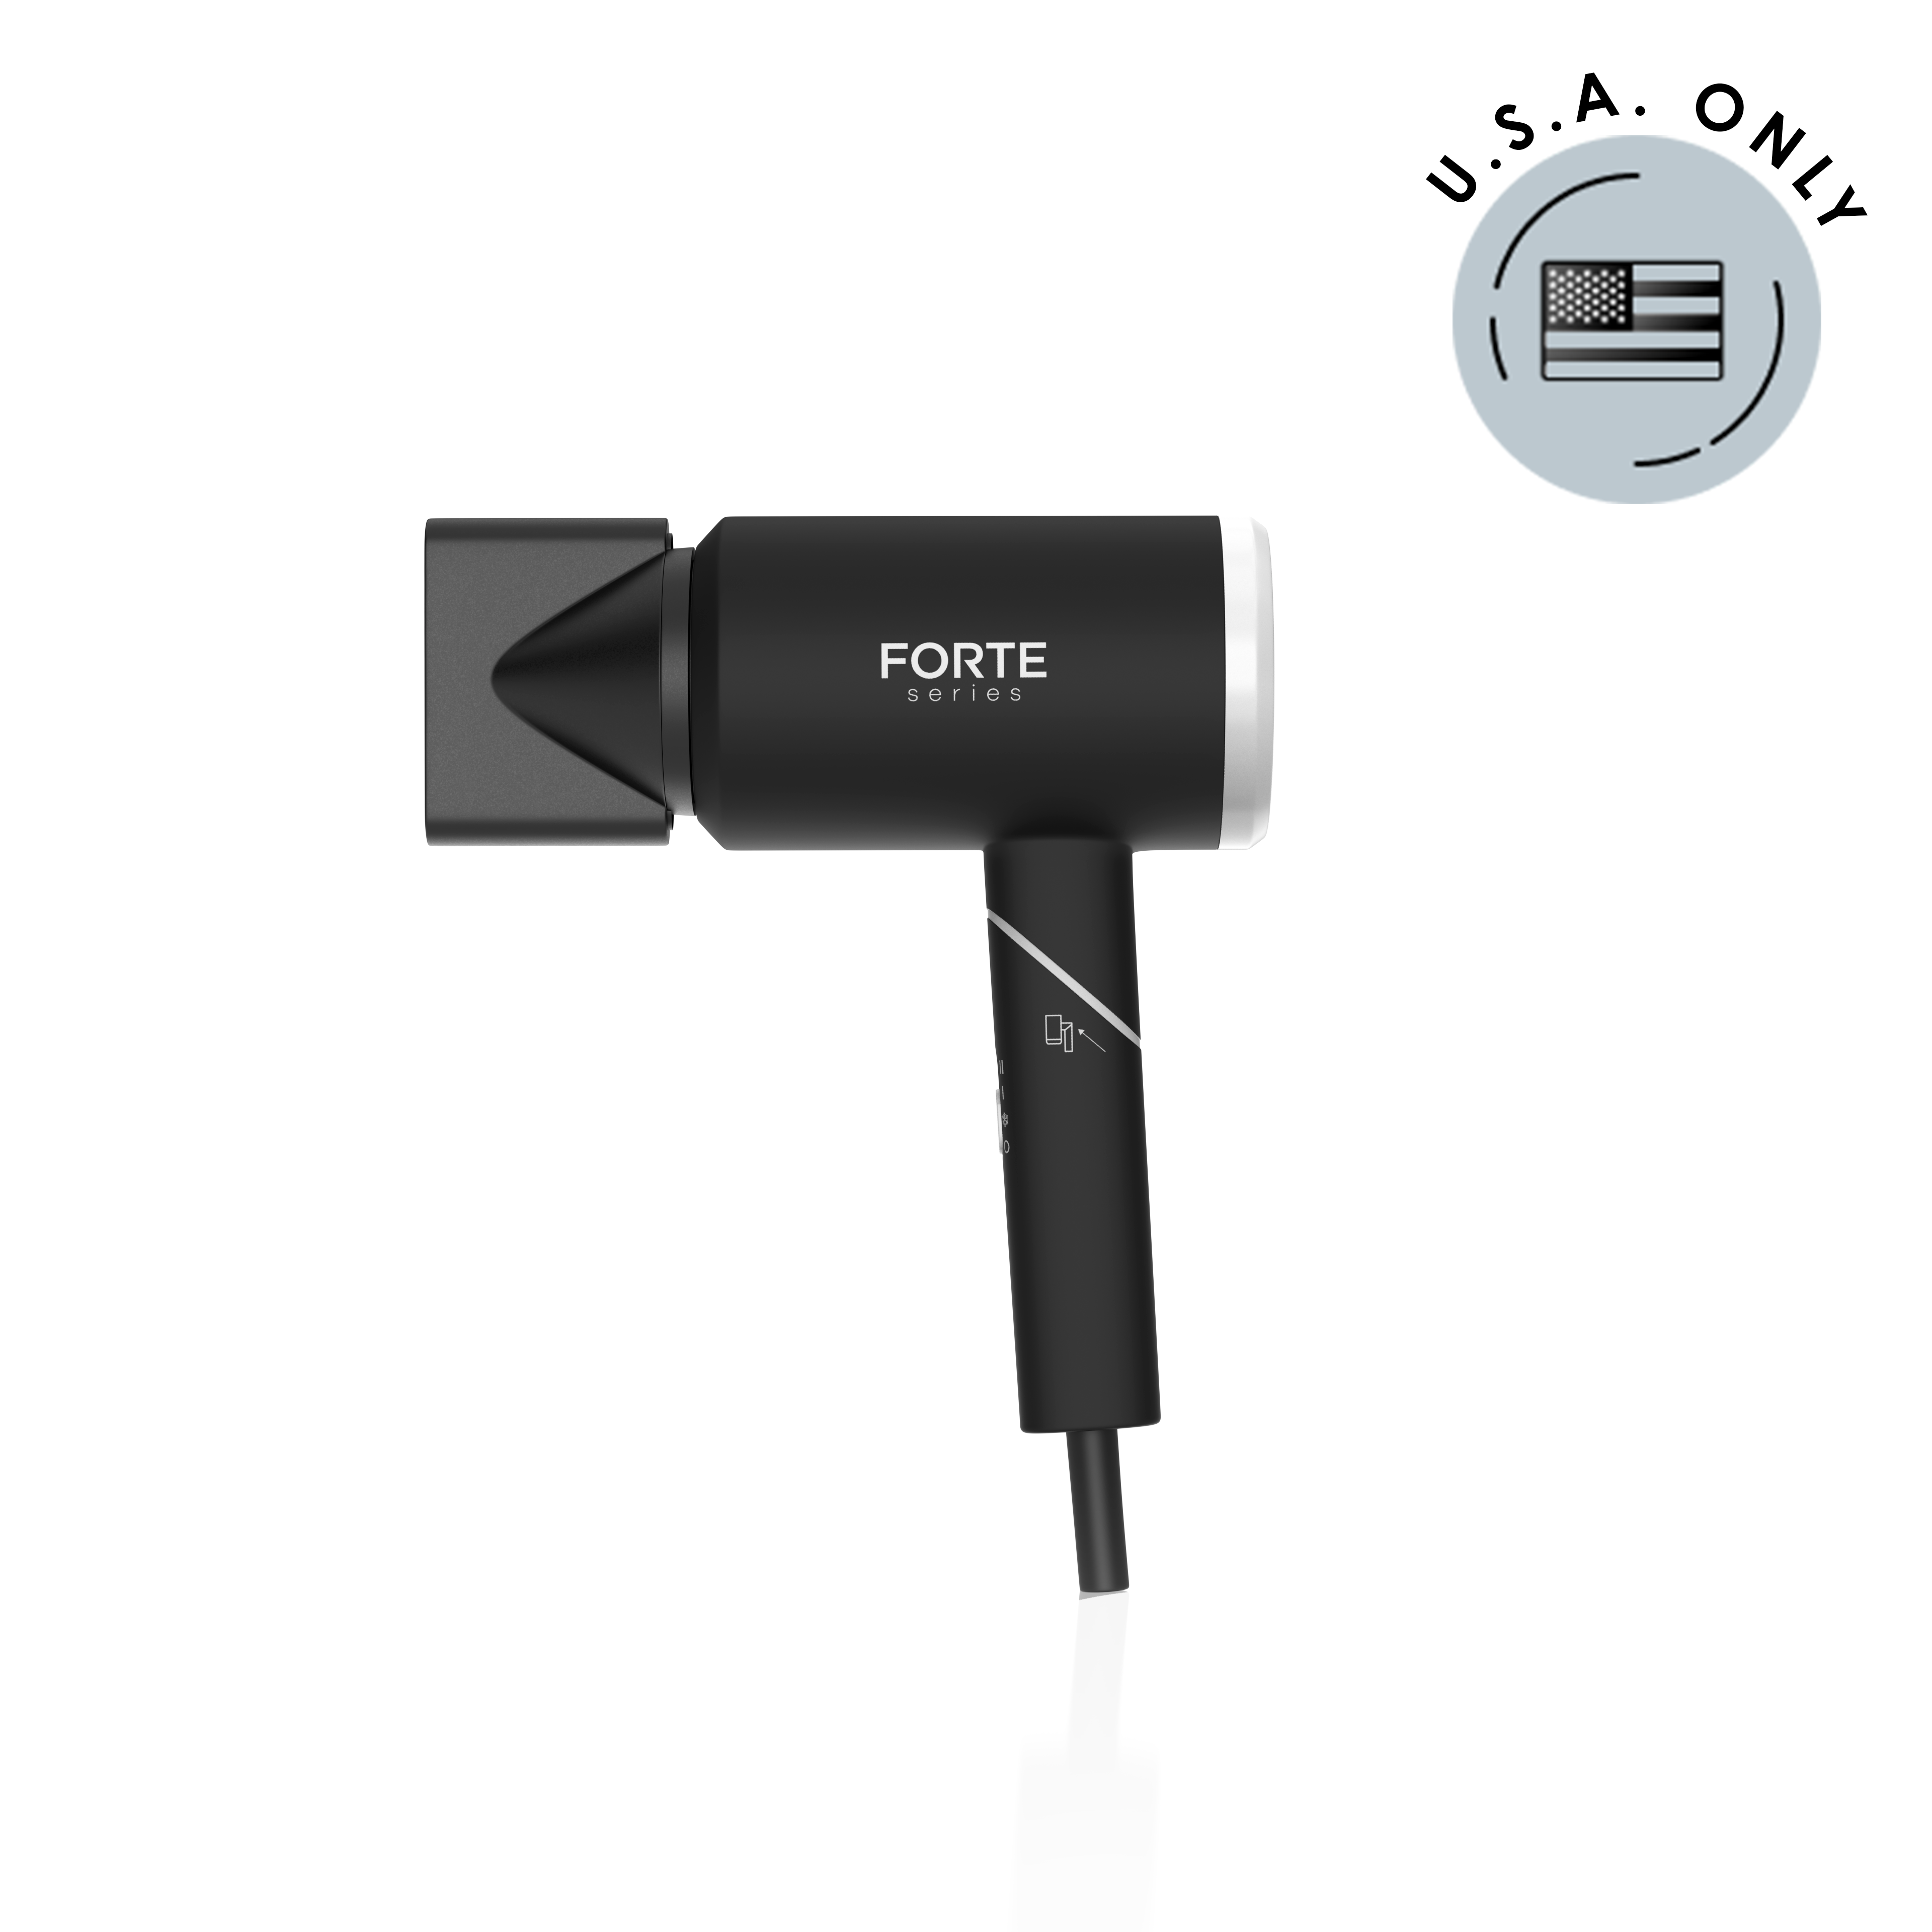 Pro Dryer – Forte Series